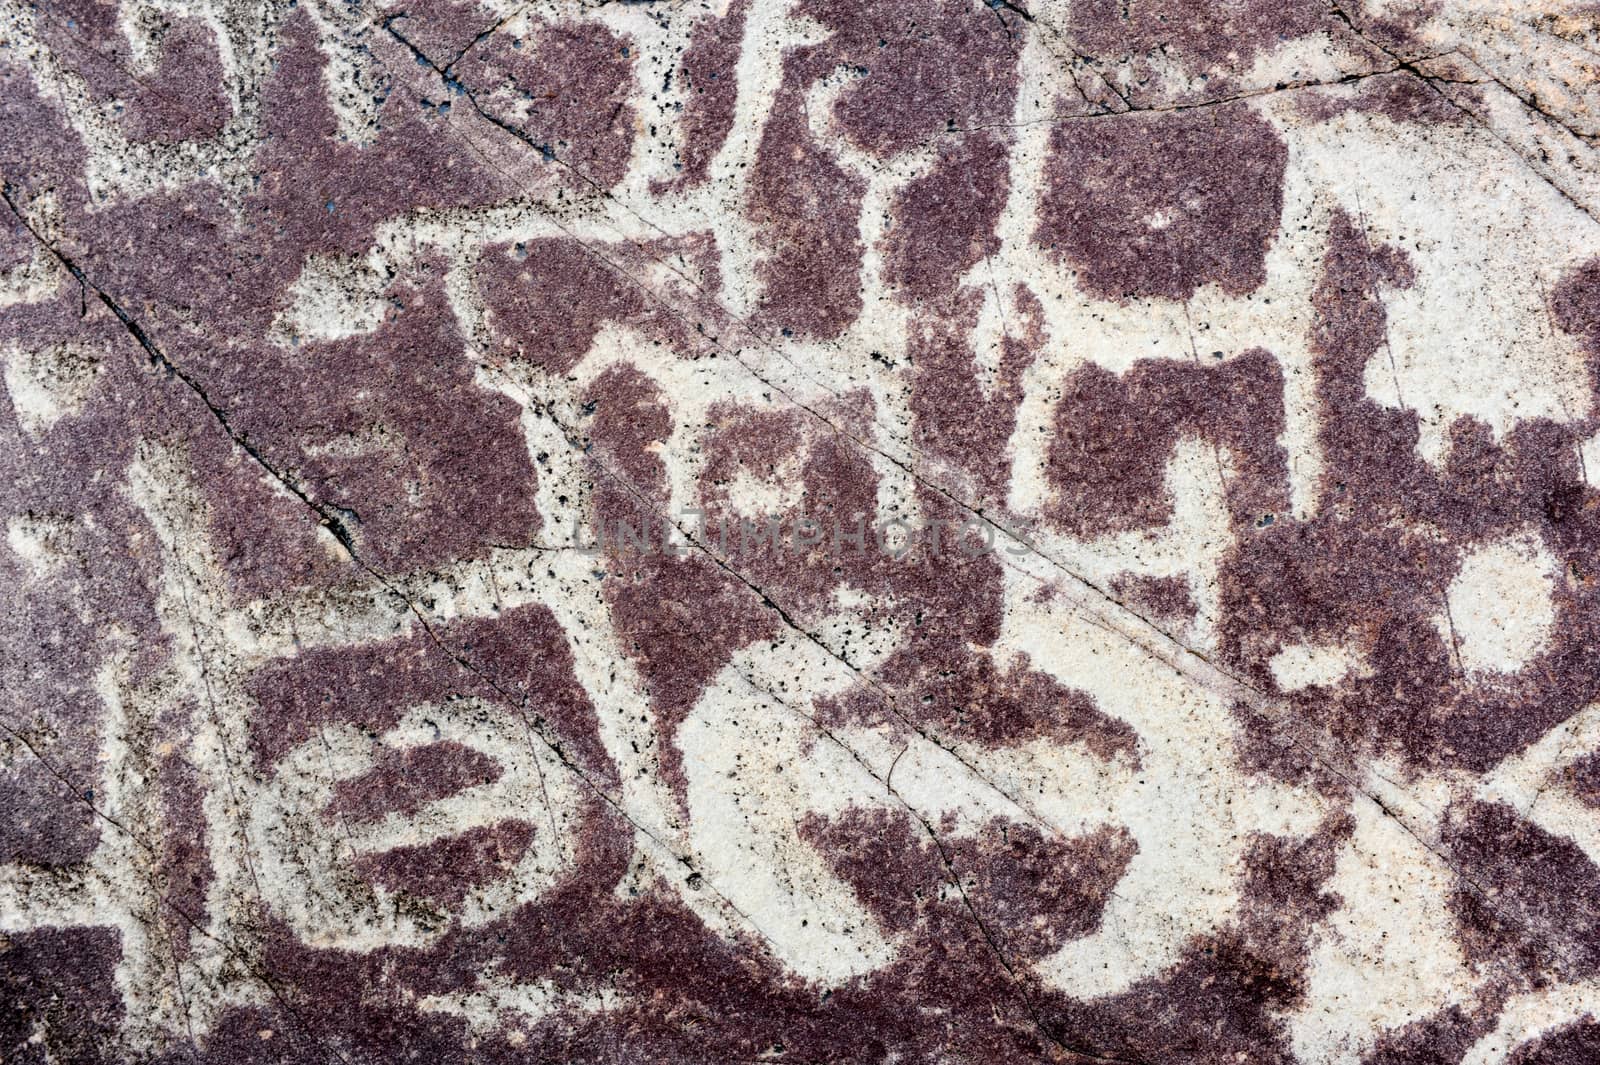 The petroglyphs of El Pintado on Quebrada de Humahuaca, Argentina